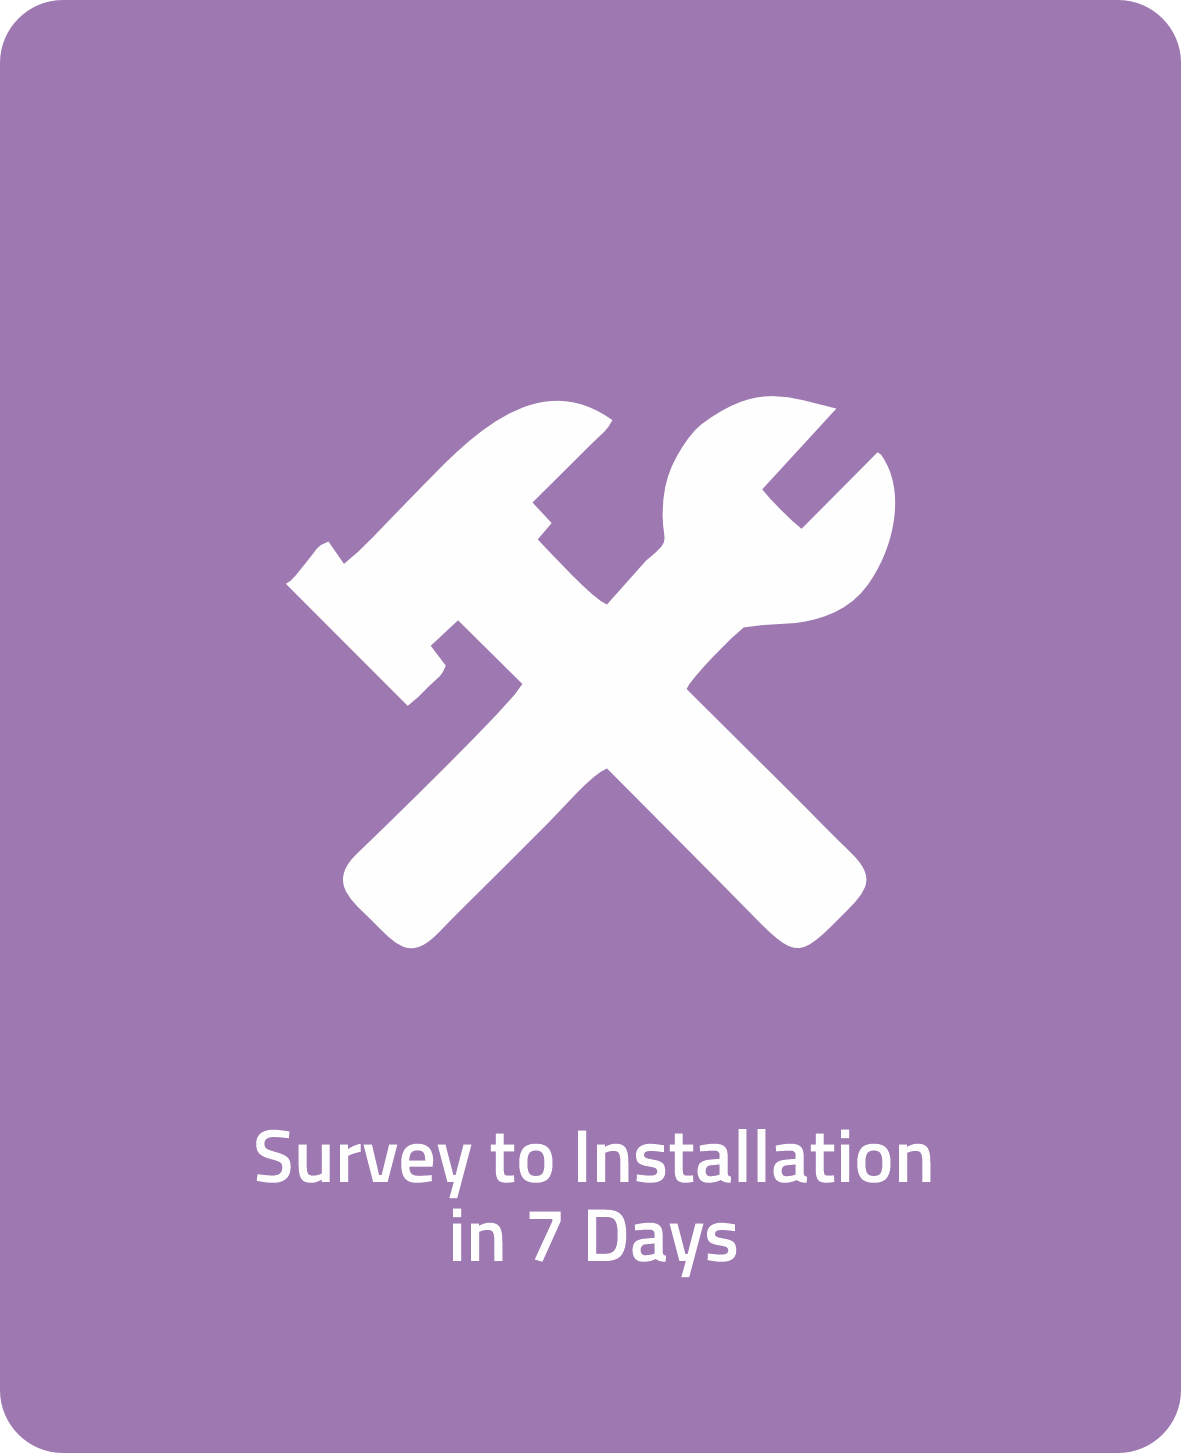 Install Survey in 7 Days